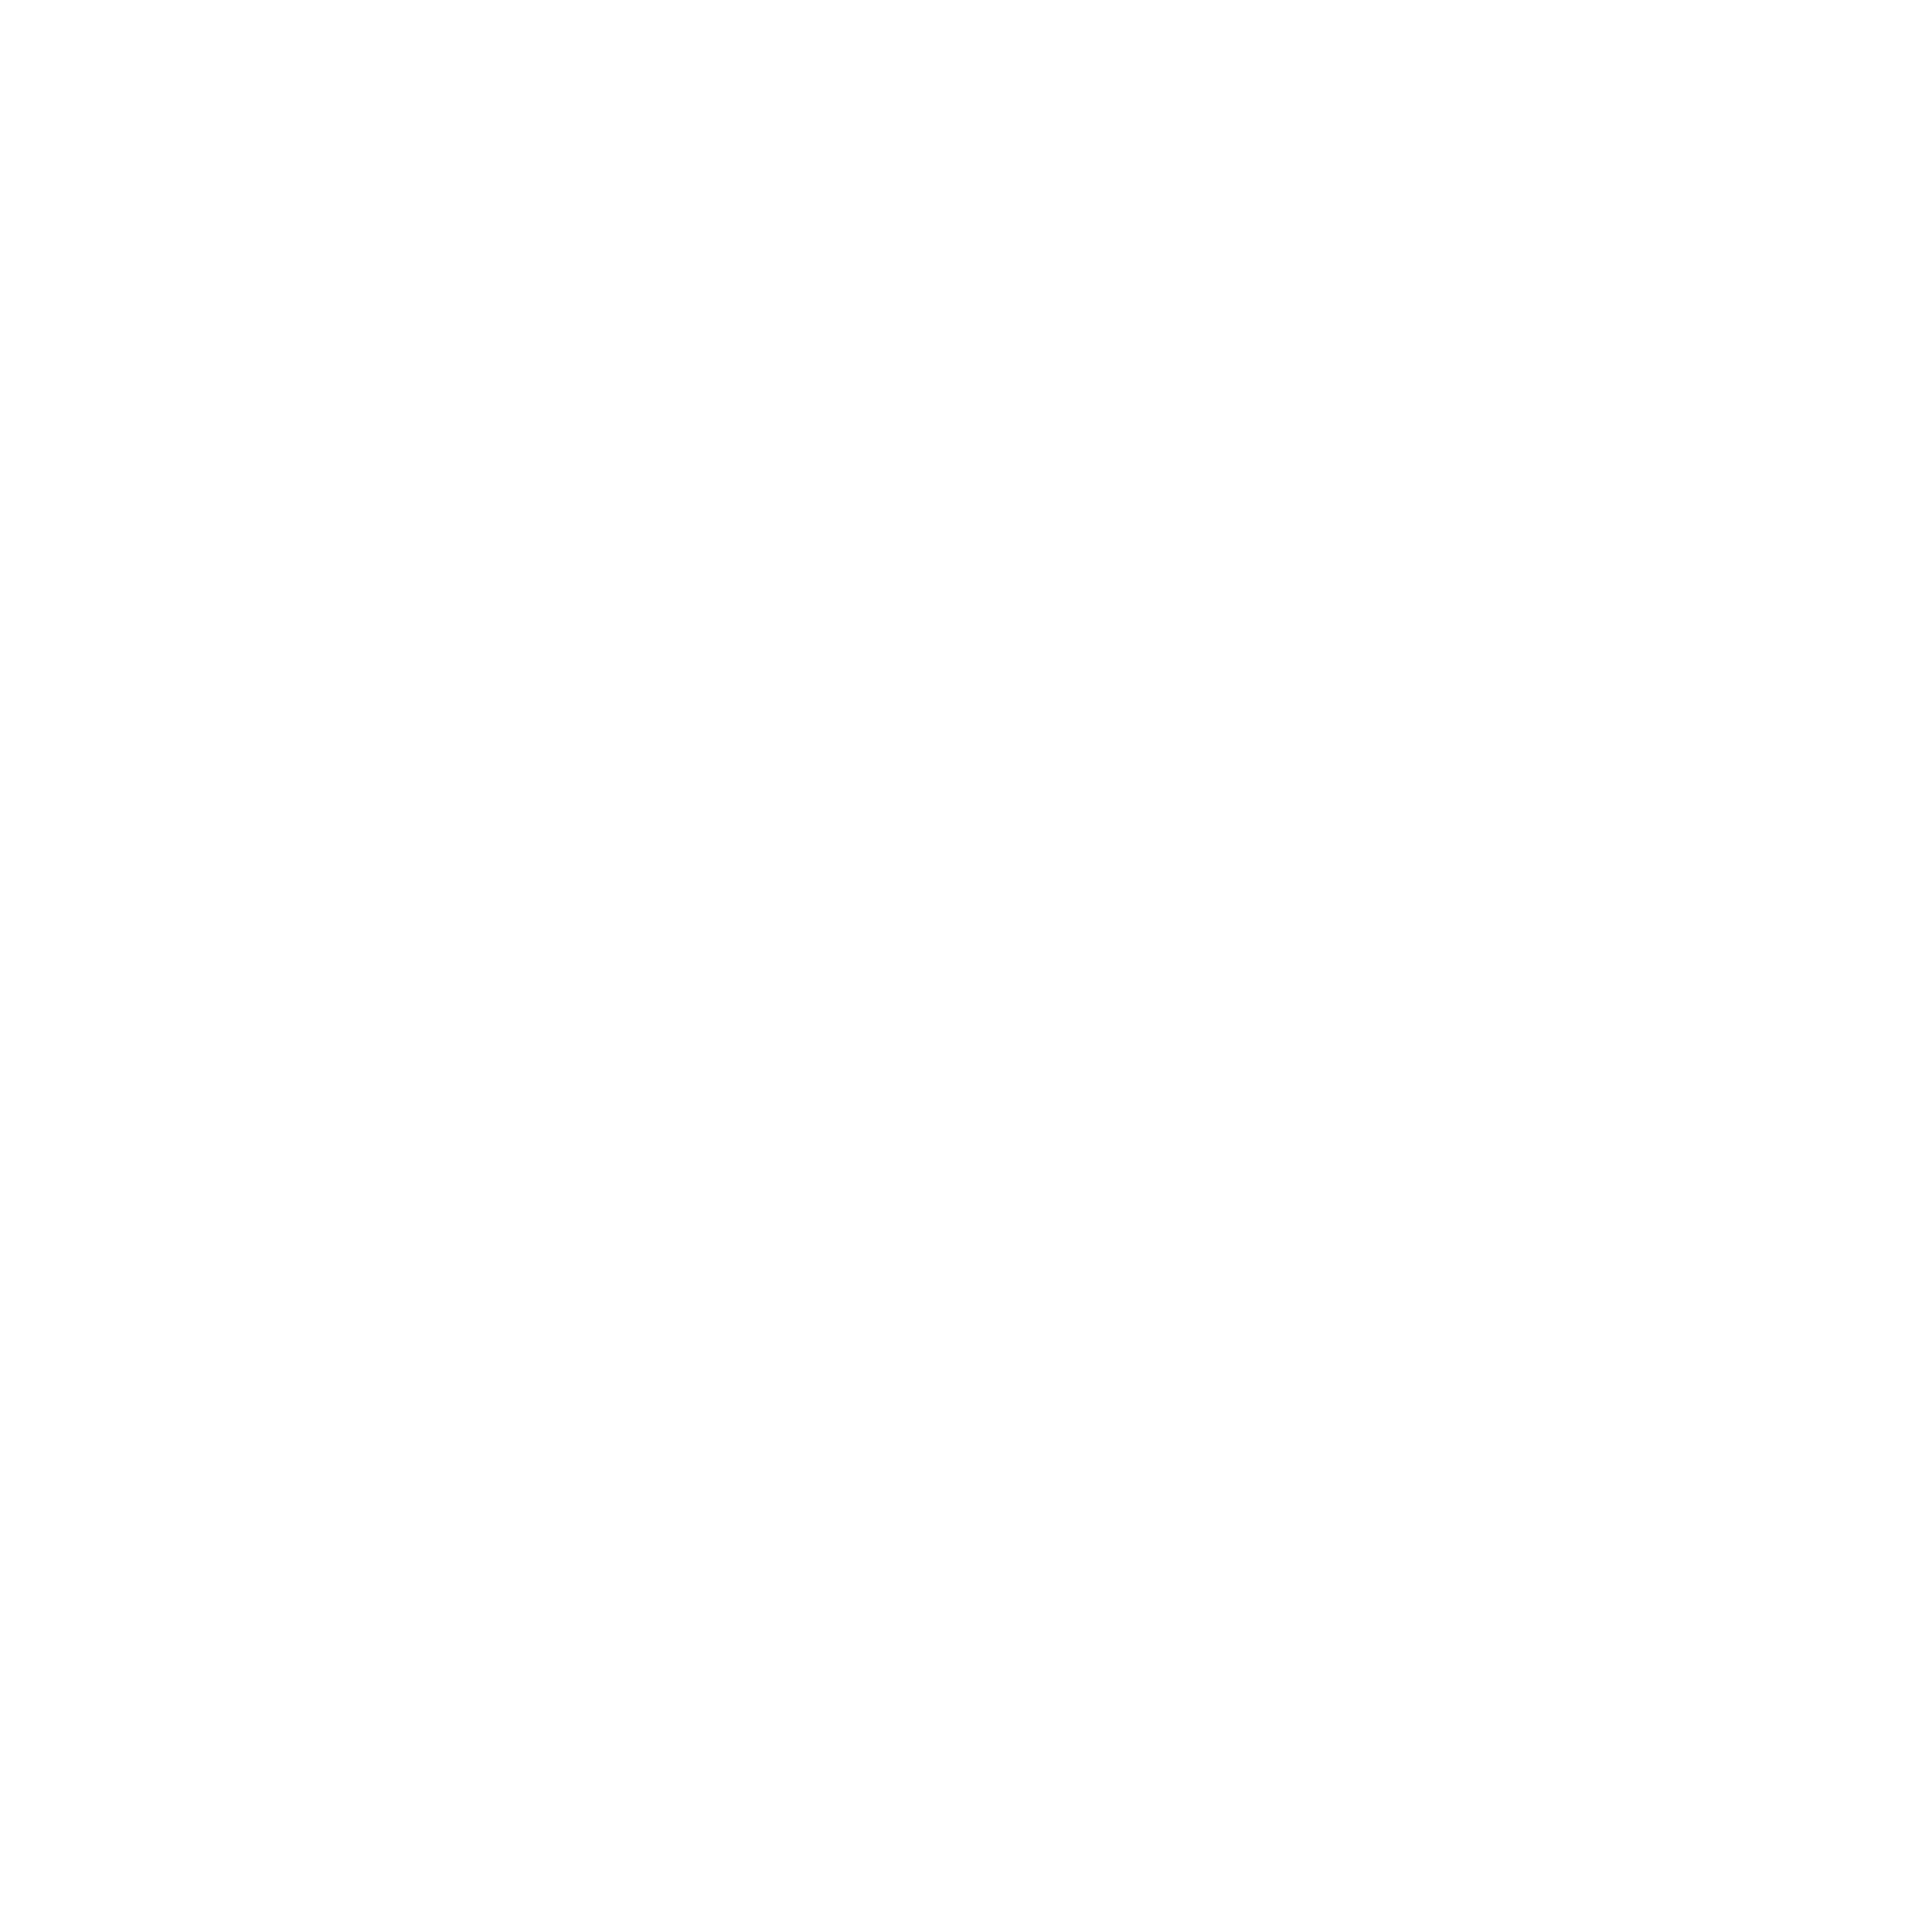 Black and White Waves Logo - Waves Logo | Waves